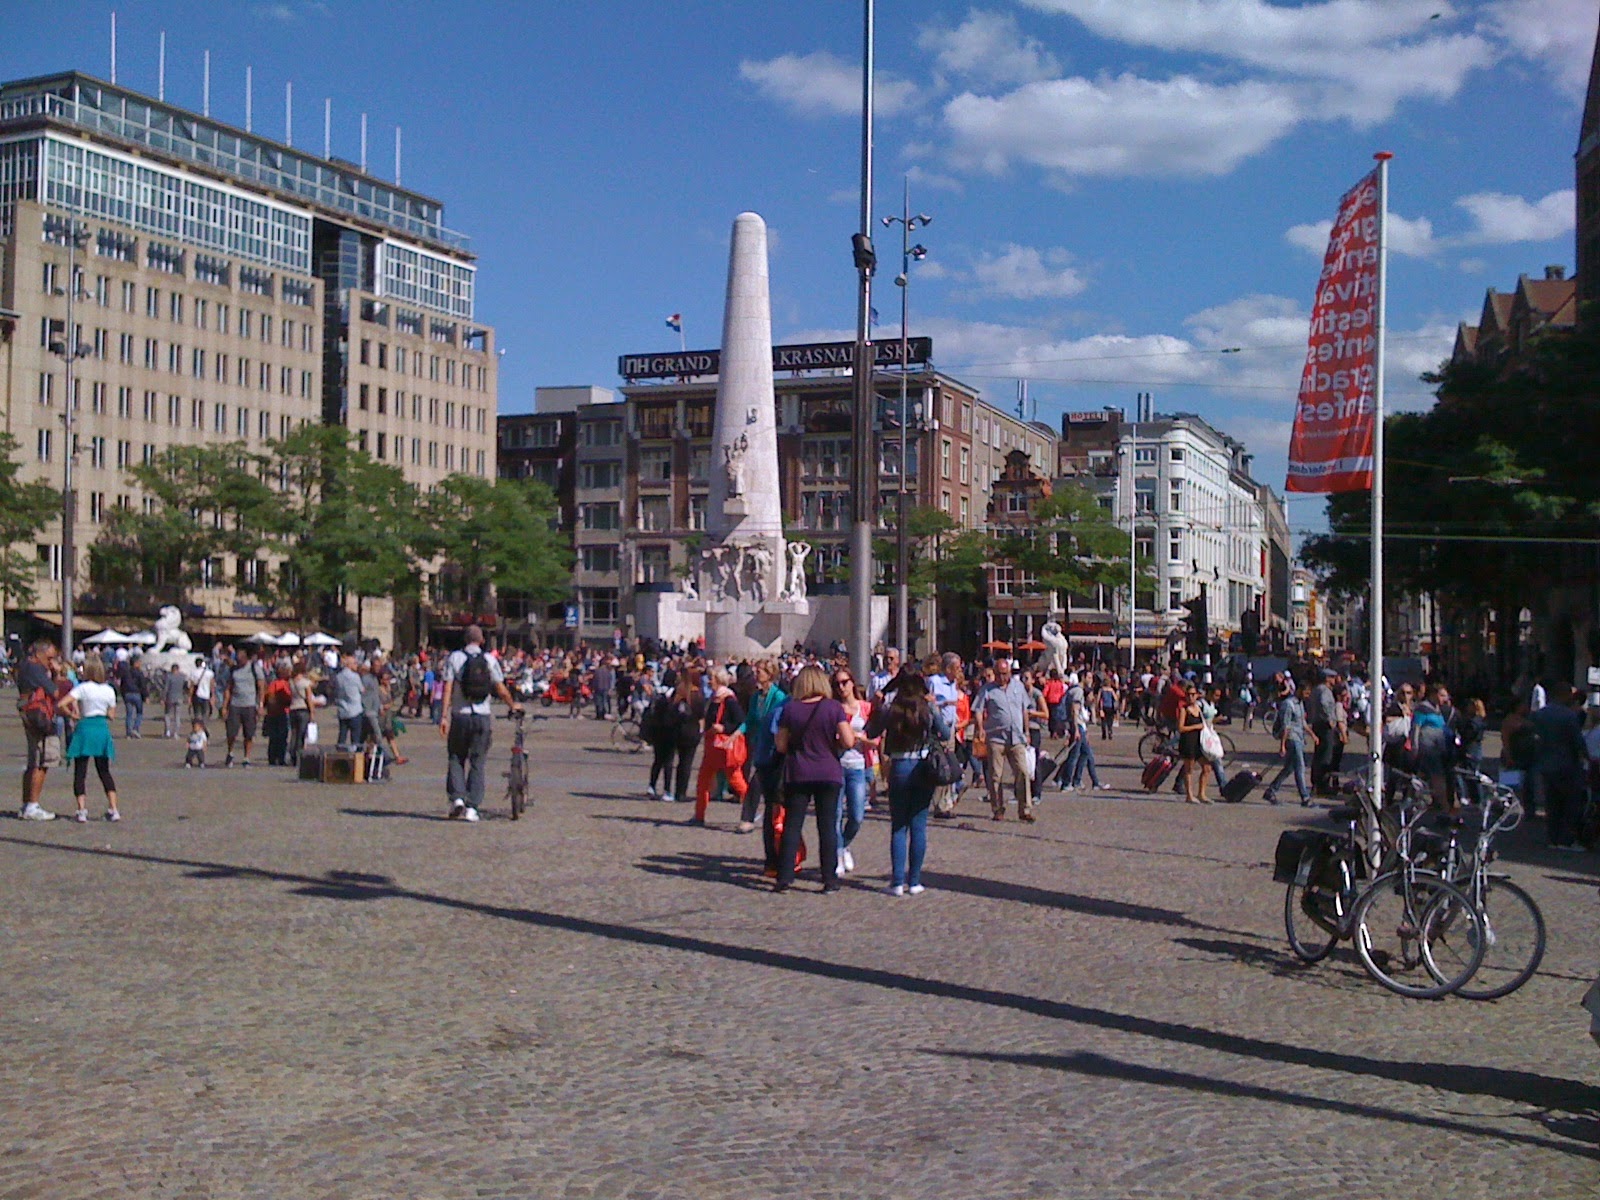 I love Amsterdam Tourist Information